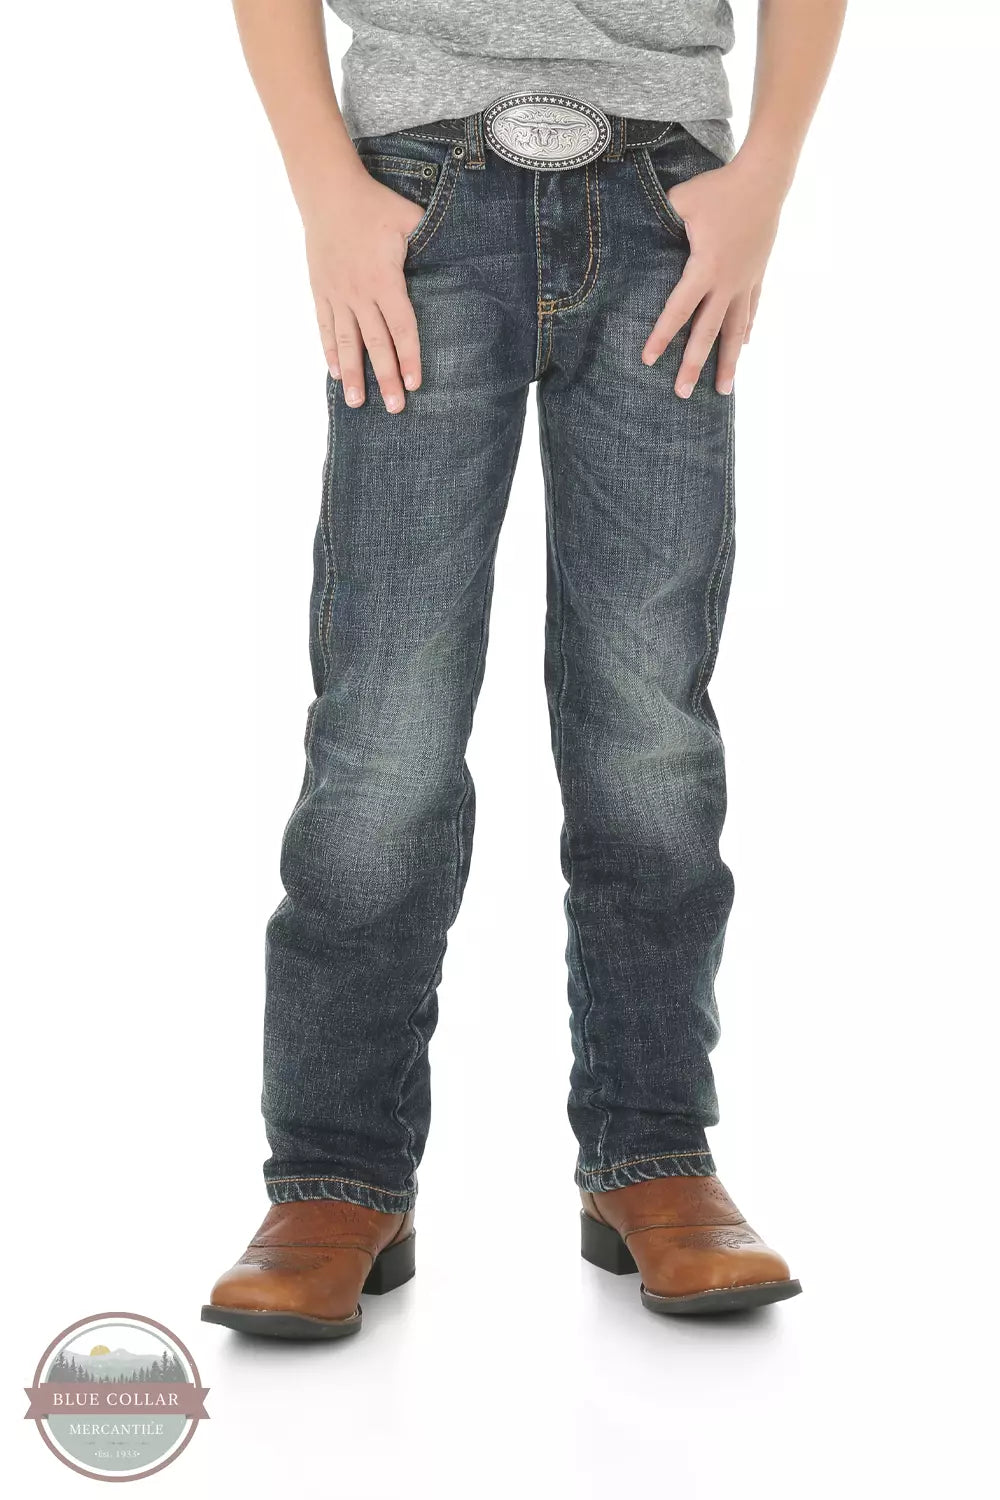 Wrangler 88JWZBZ Toddler Retro® Slim Straight Jeans in Bozeman Front View